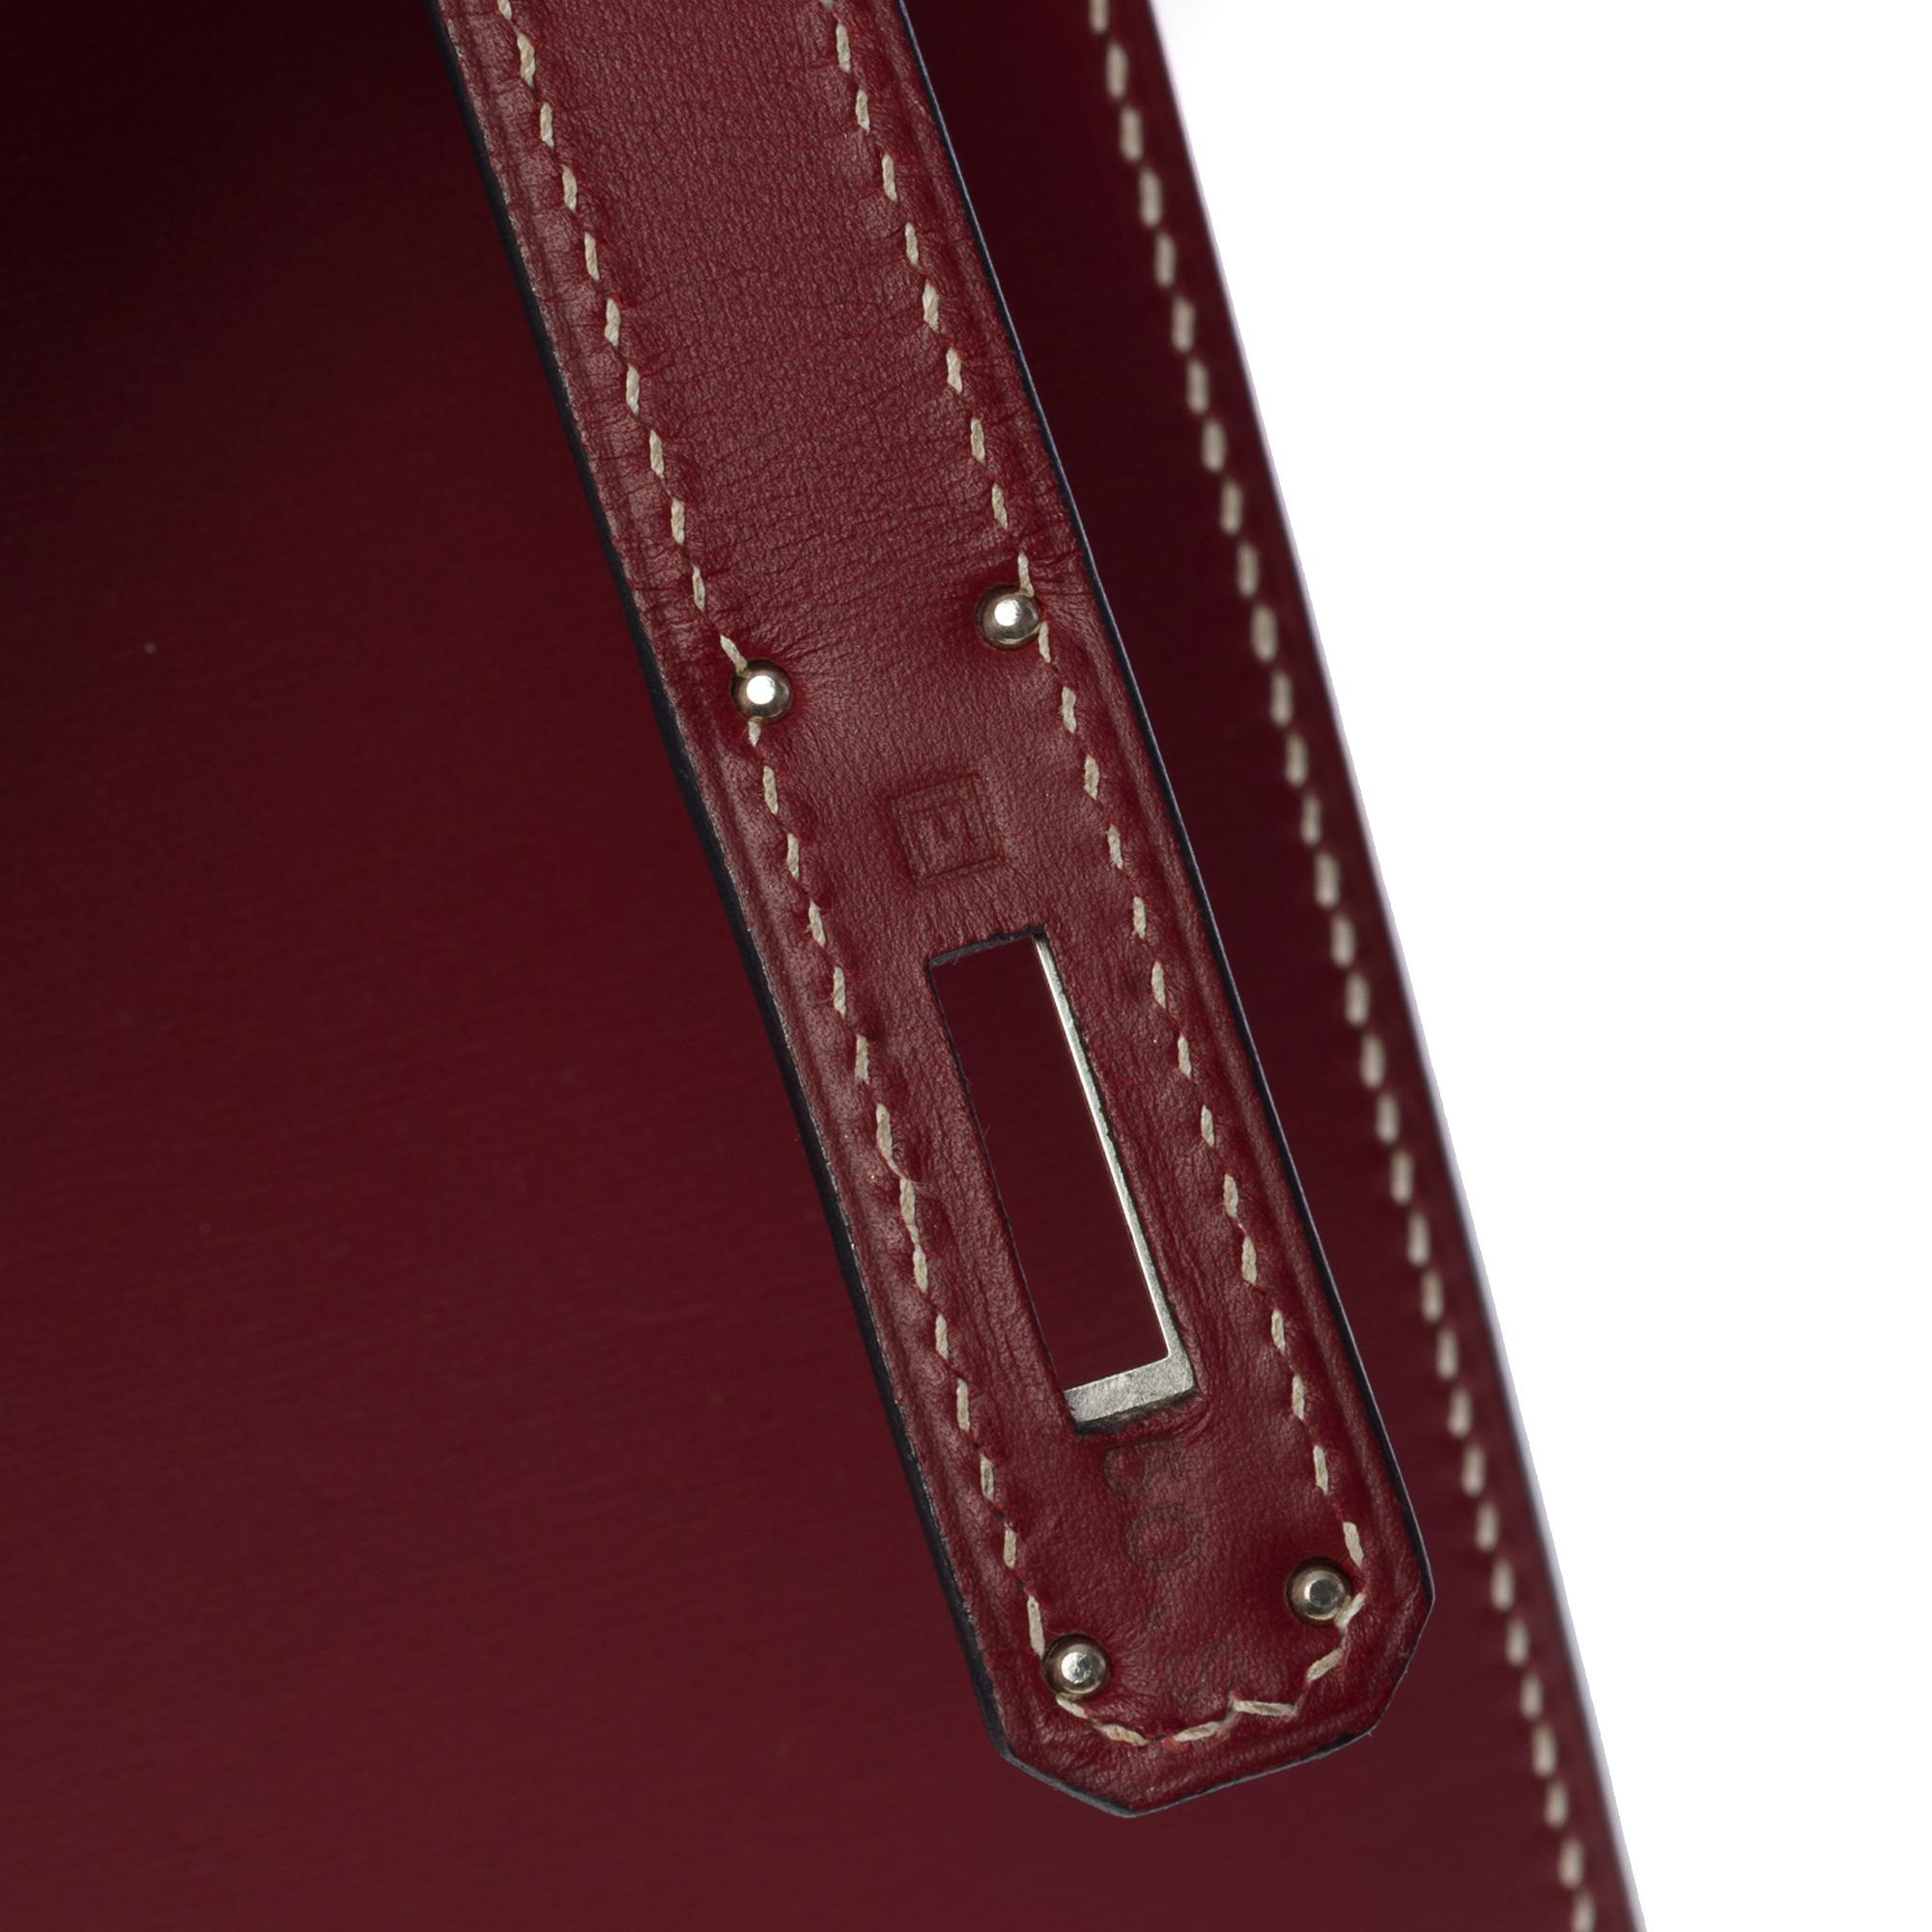 Very Rare Hermès Kelly 32 sellier handbag strap in Rouge H Chamonix leather, SHW 2